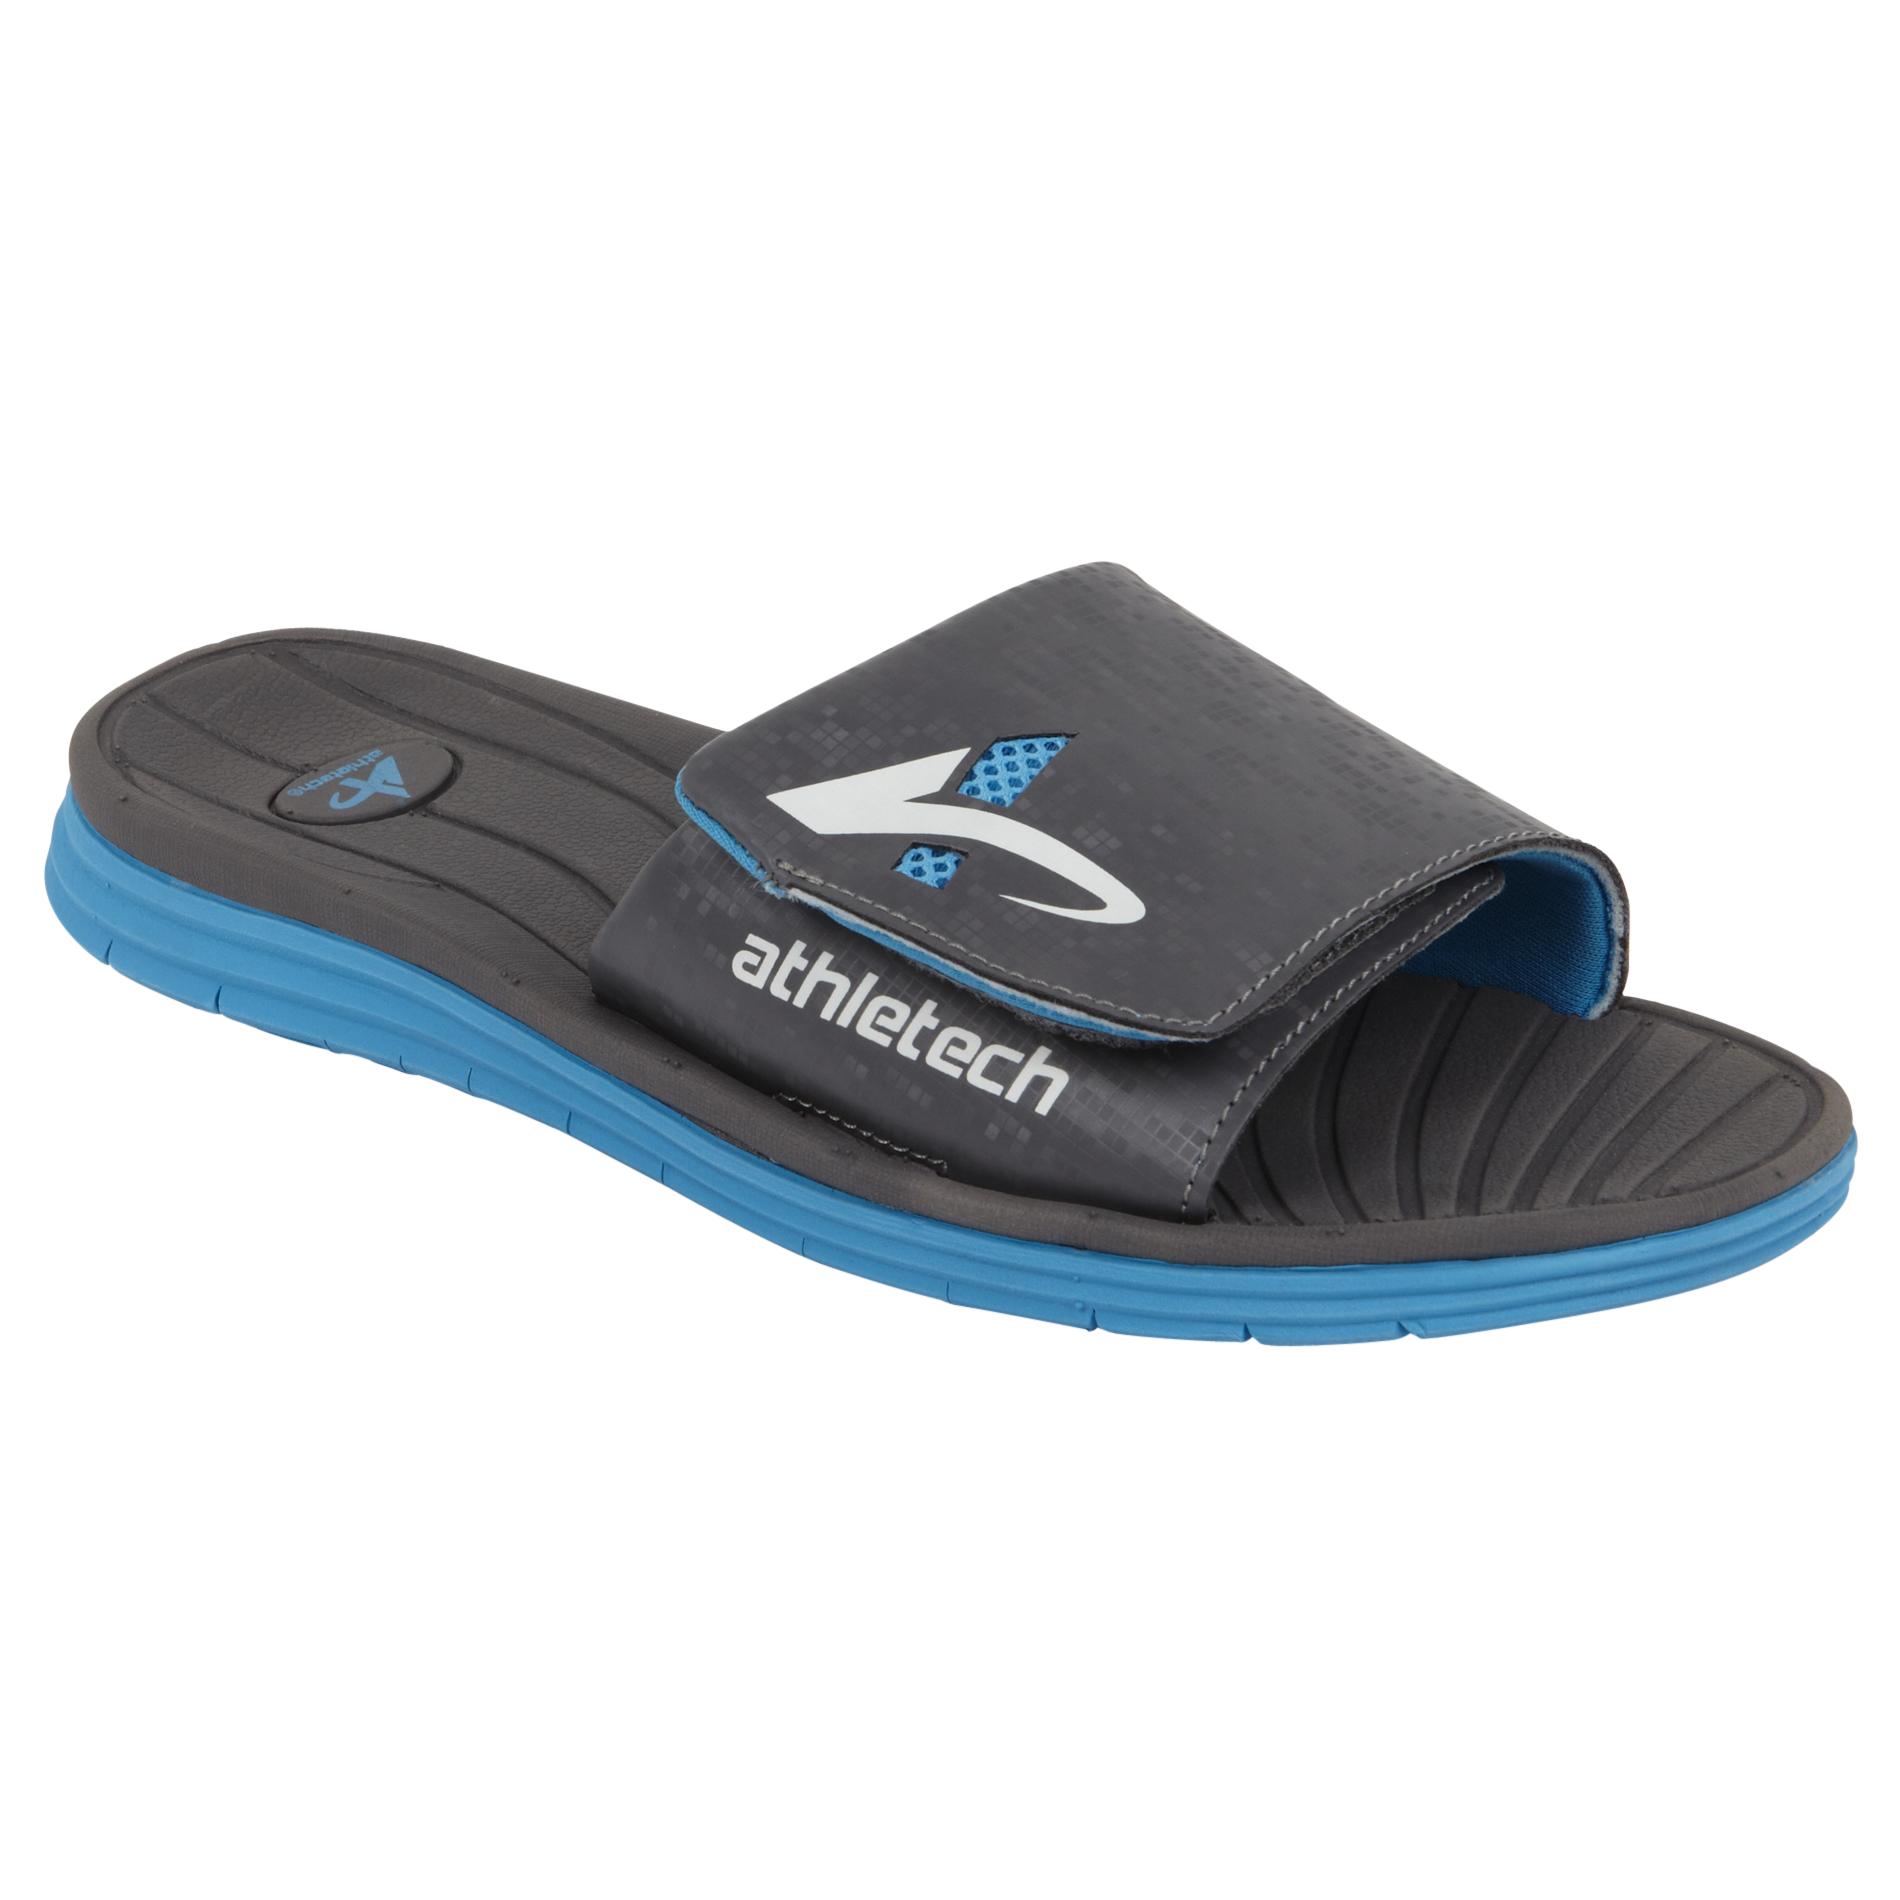 Athletech Men's Slide Sandal Megaflex 2 - Grey